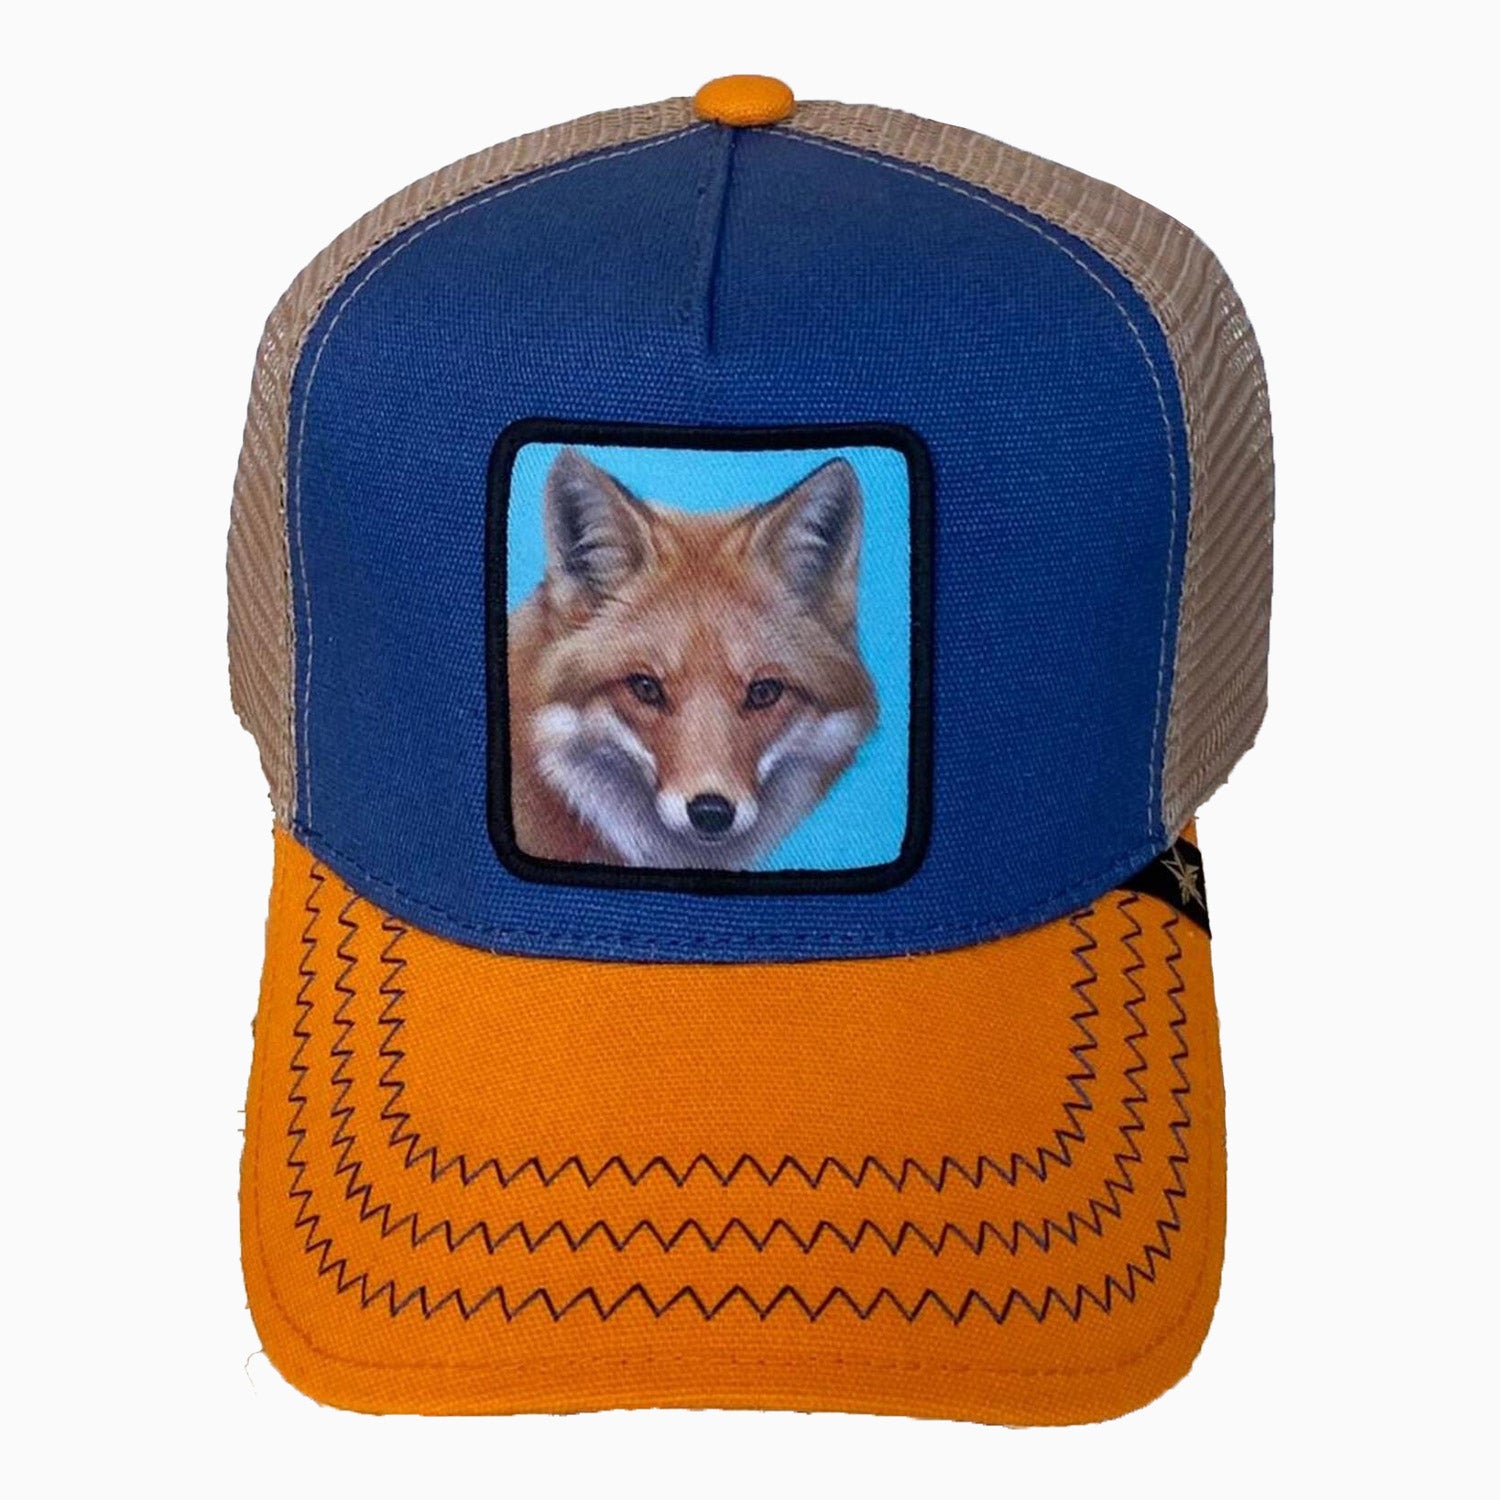 gold-star-hats-the-fox-3-tone-trucker-hat-gs144-blue